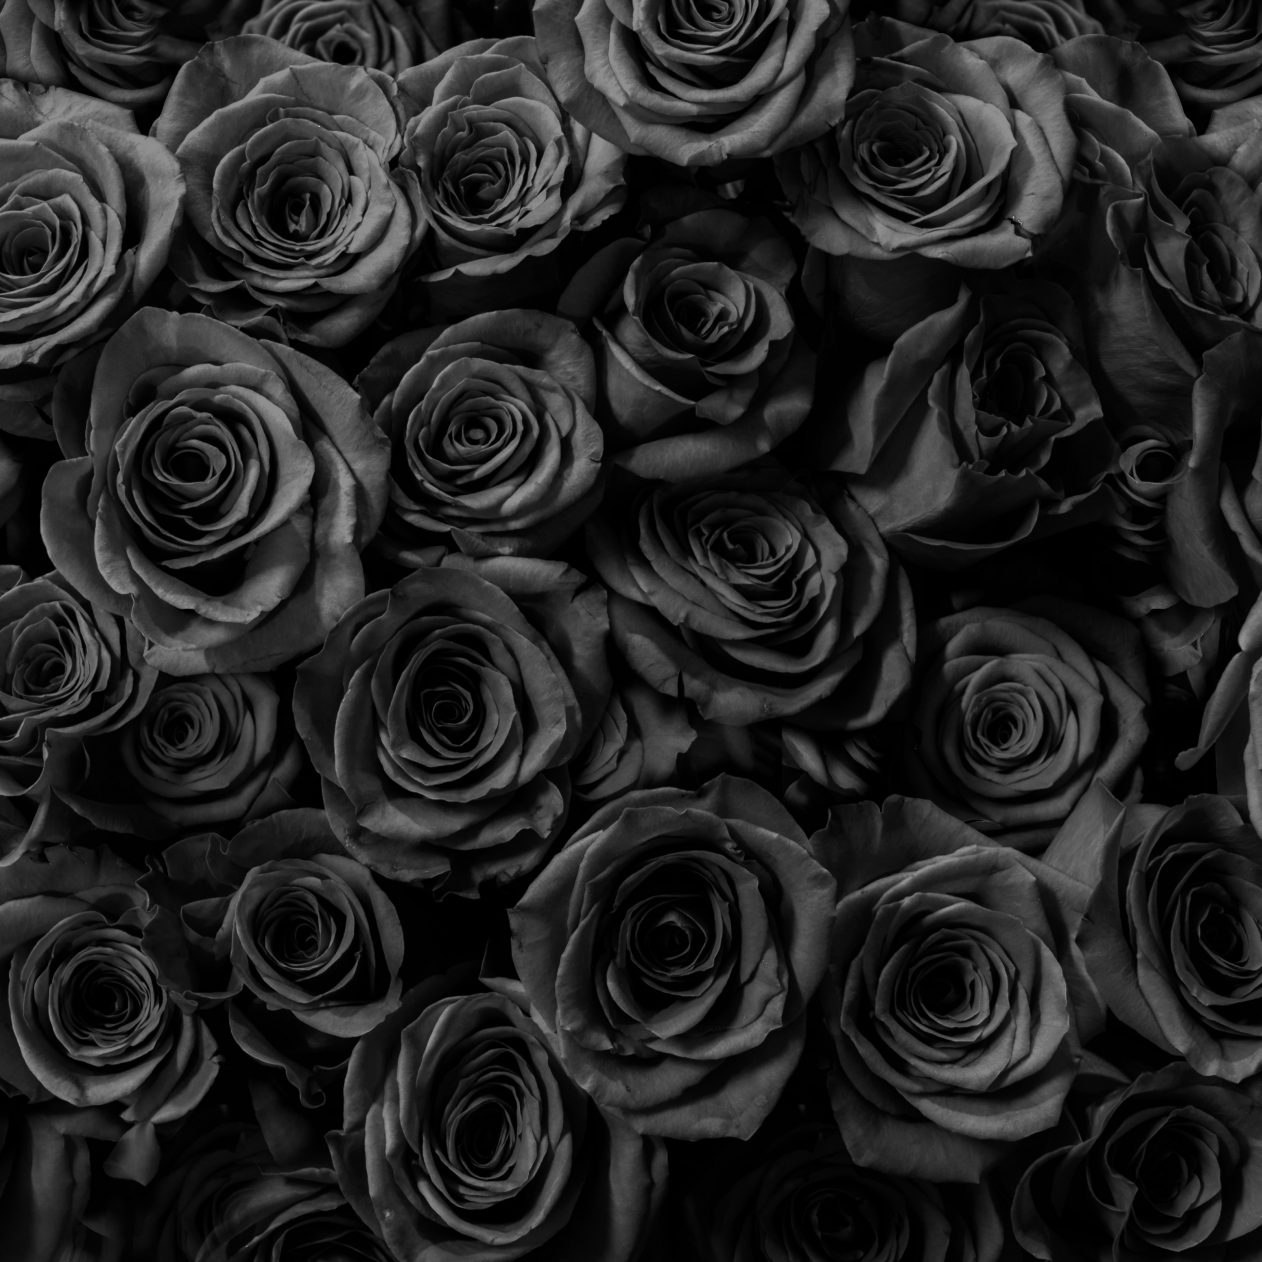 1262x1262 Parallax wallpaper 4k Black Roses Gift Anniversary iPad Wallpaper 1262x1262 pixels resolution